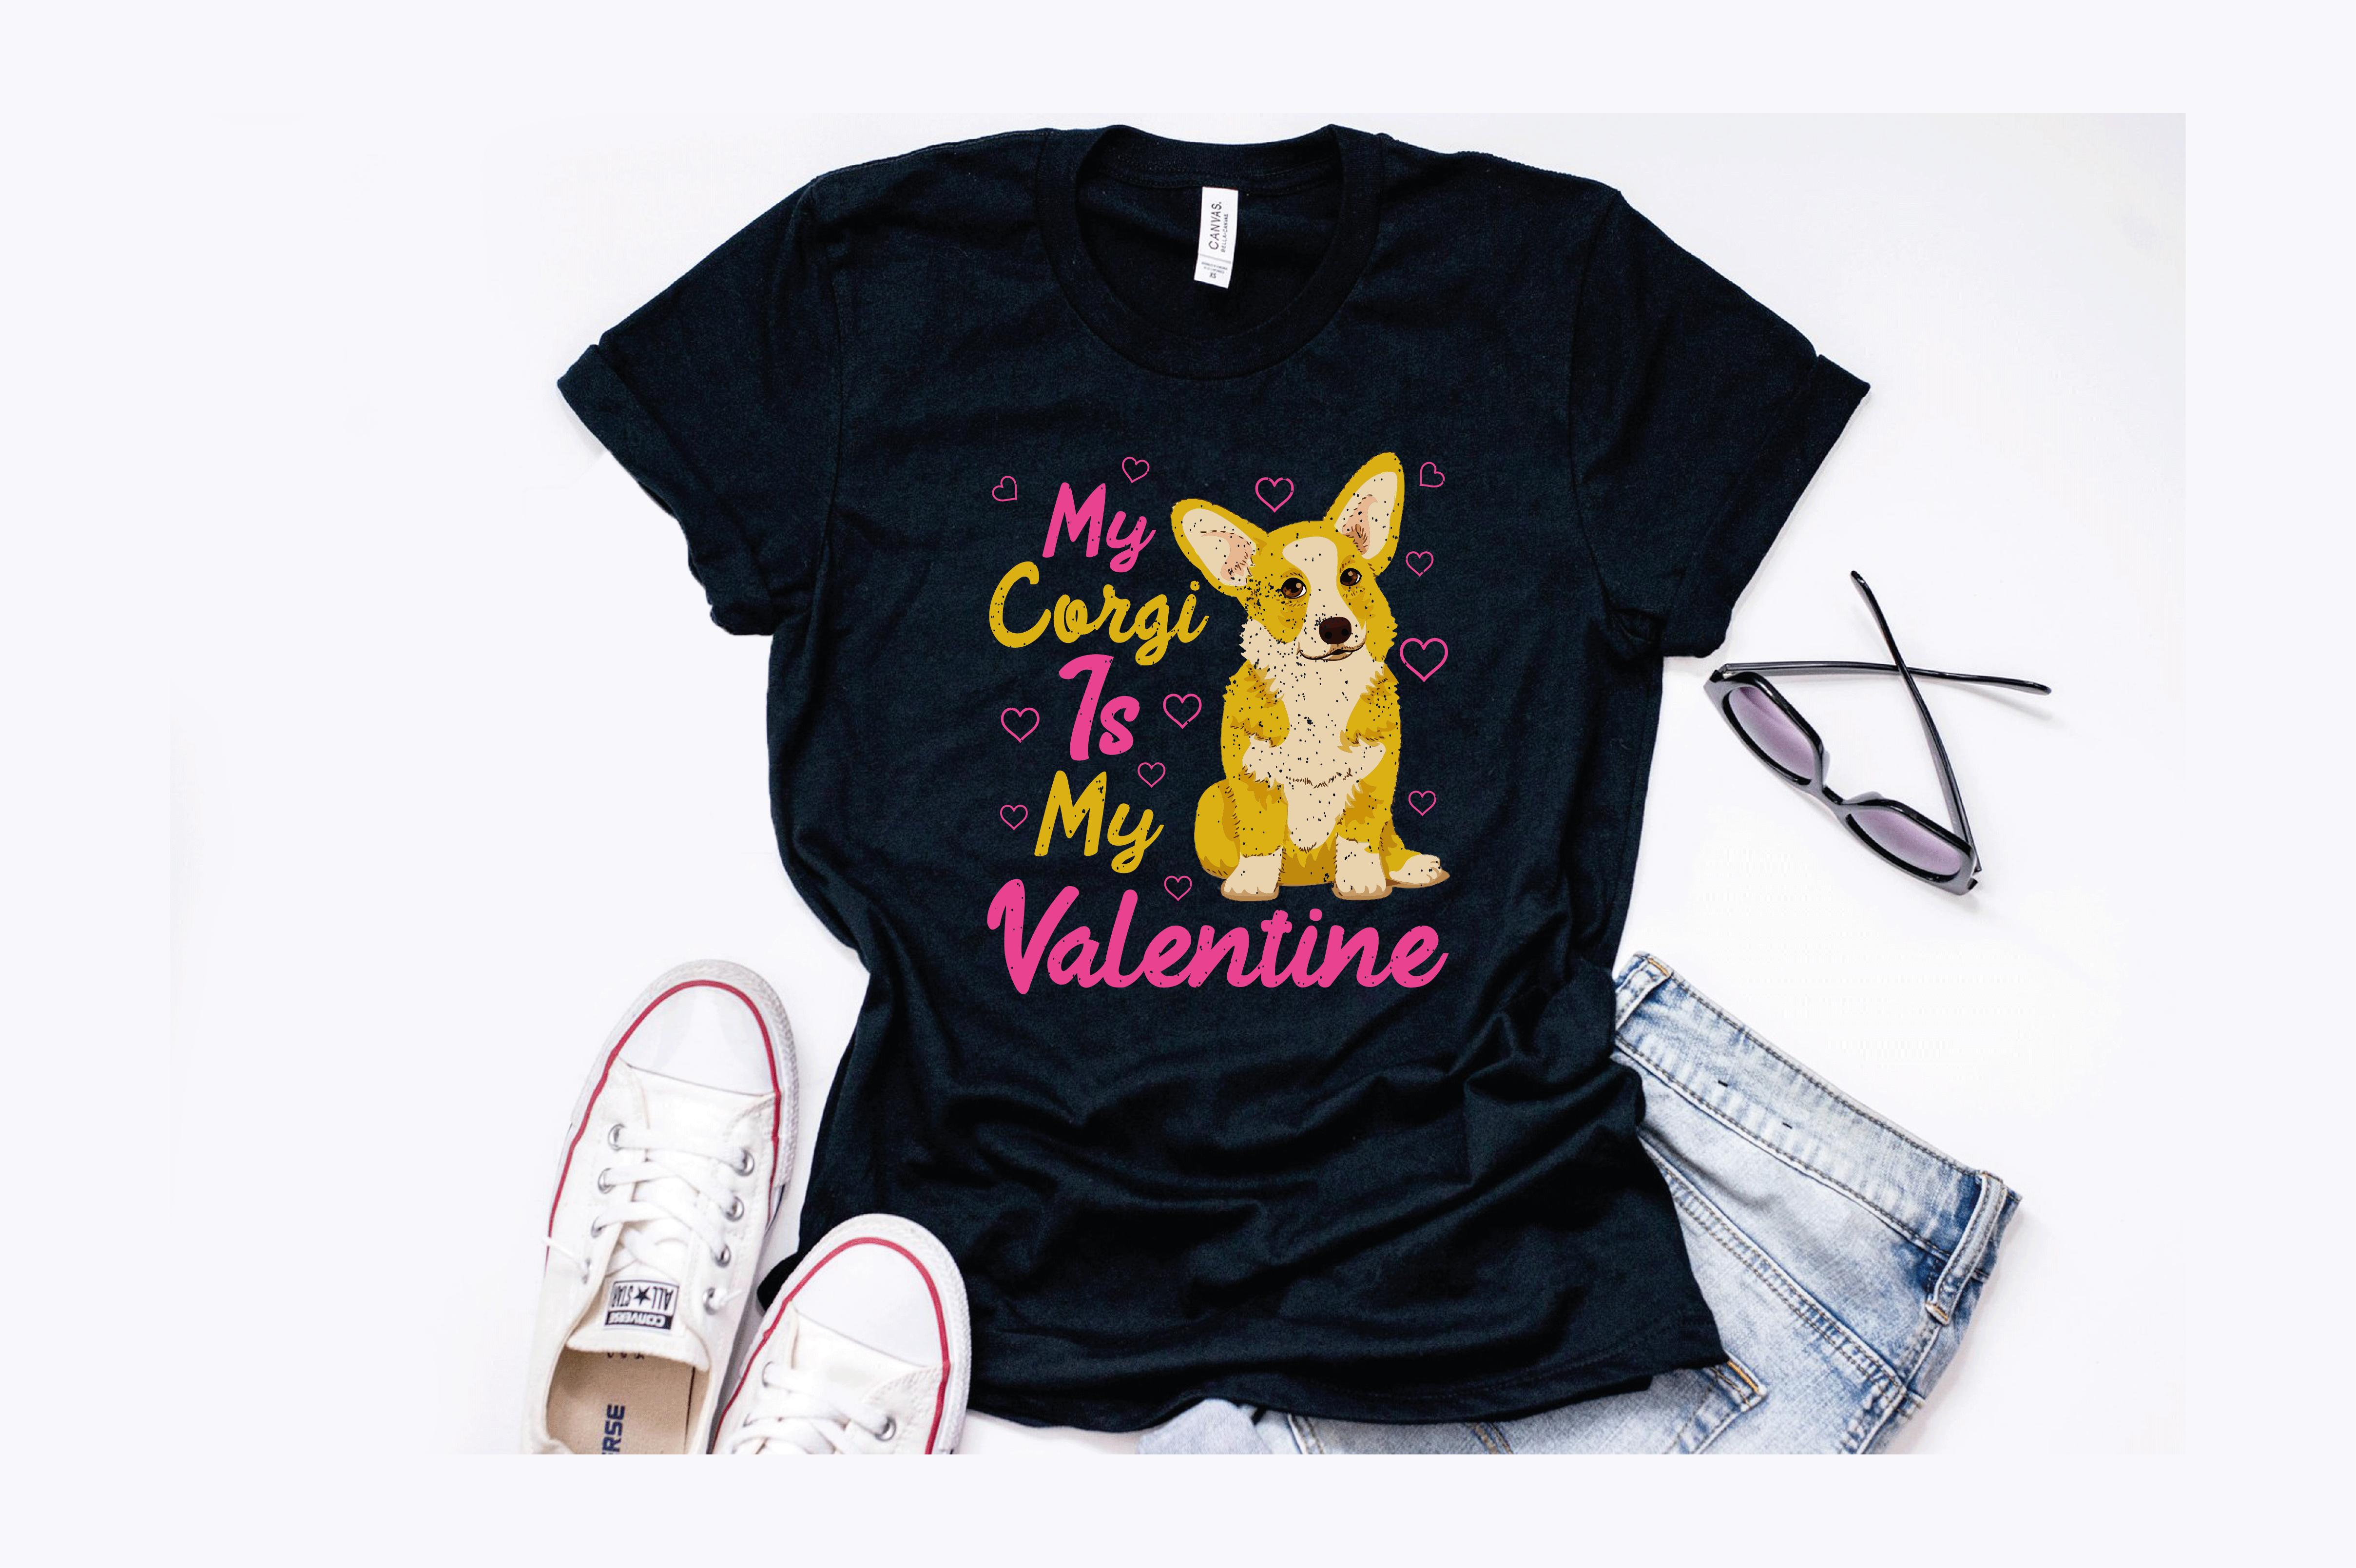 My Corgi is My Valentine T-Shirt